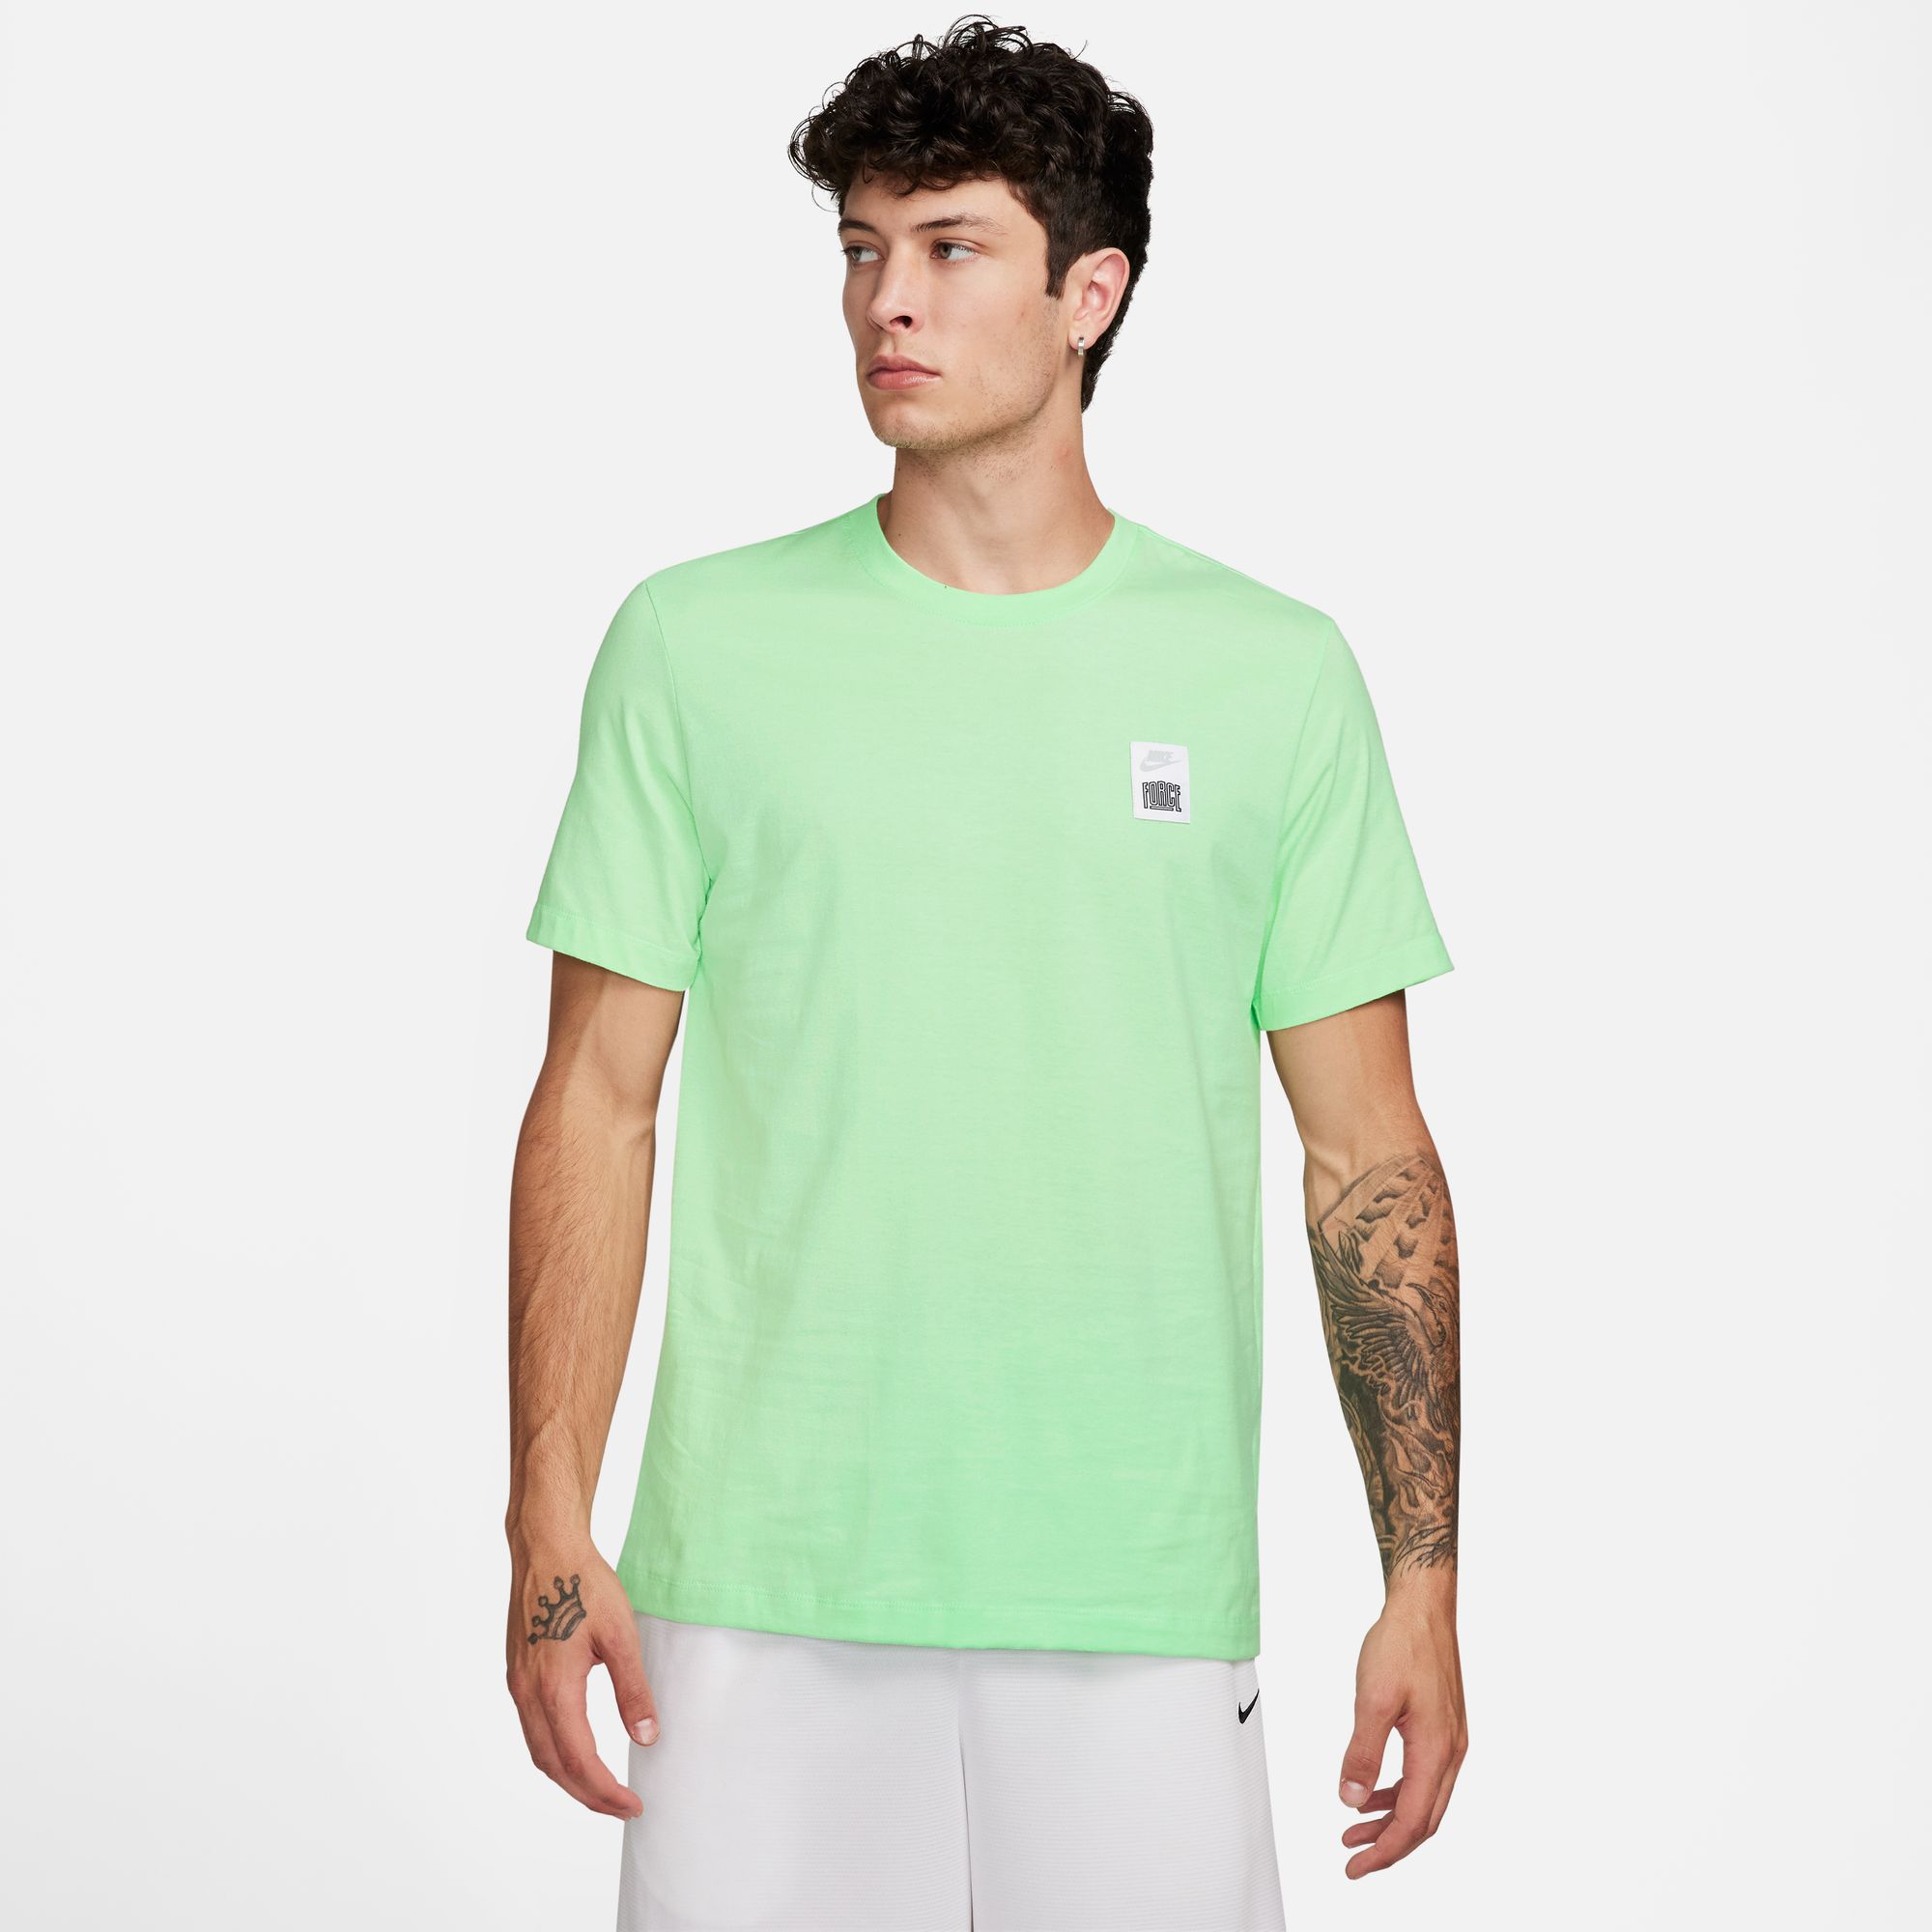 Nike Basketball T-Shirt